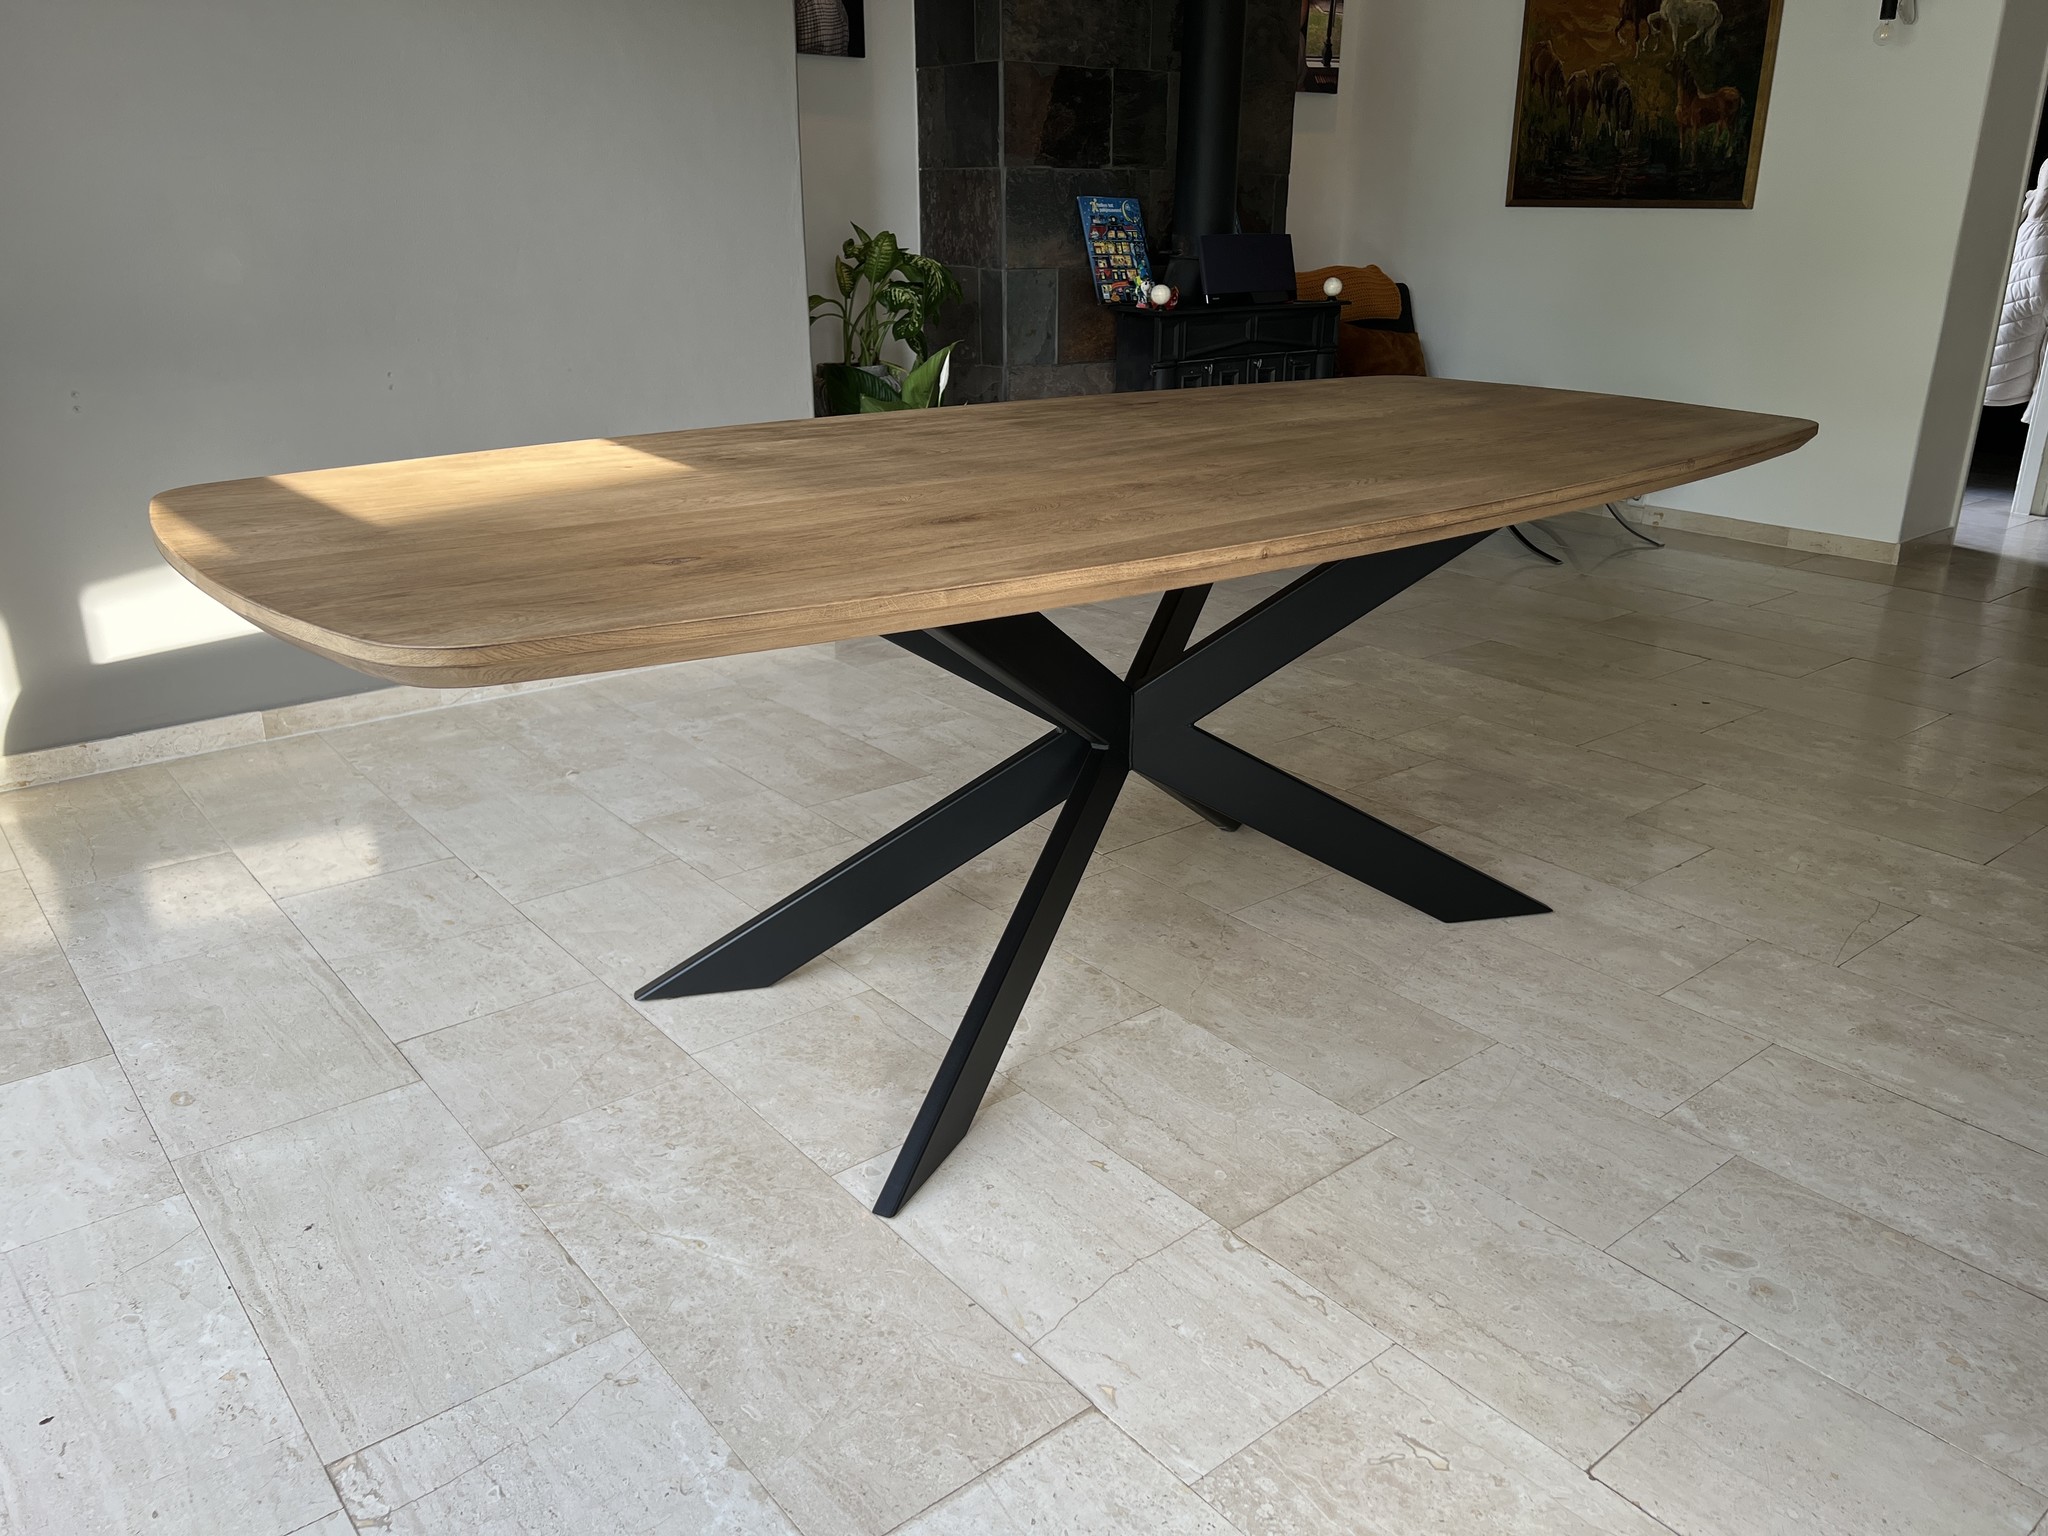 Deense ovale tafel met kruispoot - Perfect elk interieur - Houtentafelshop.nl